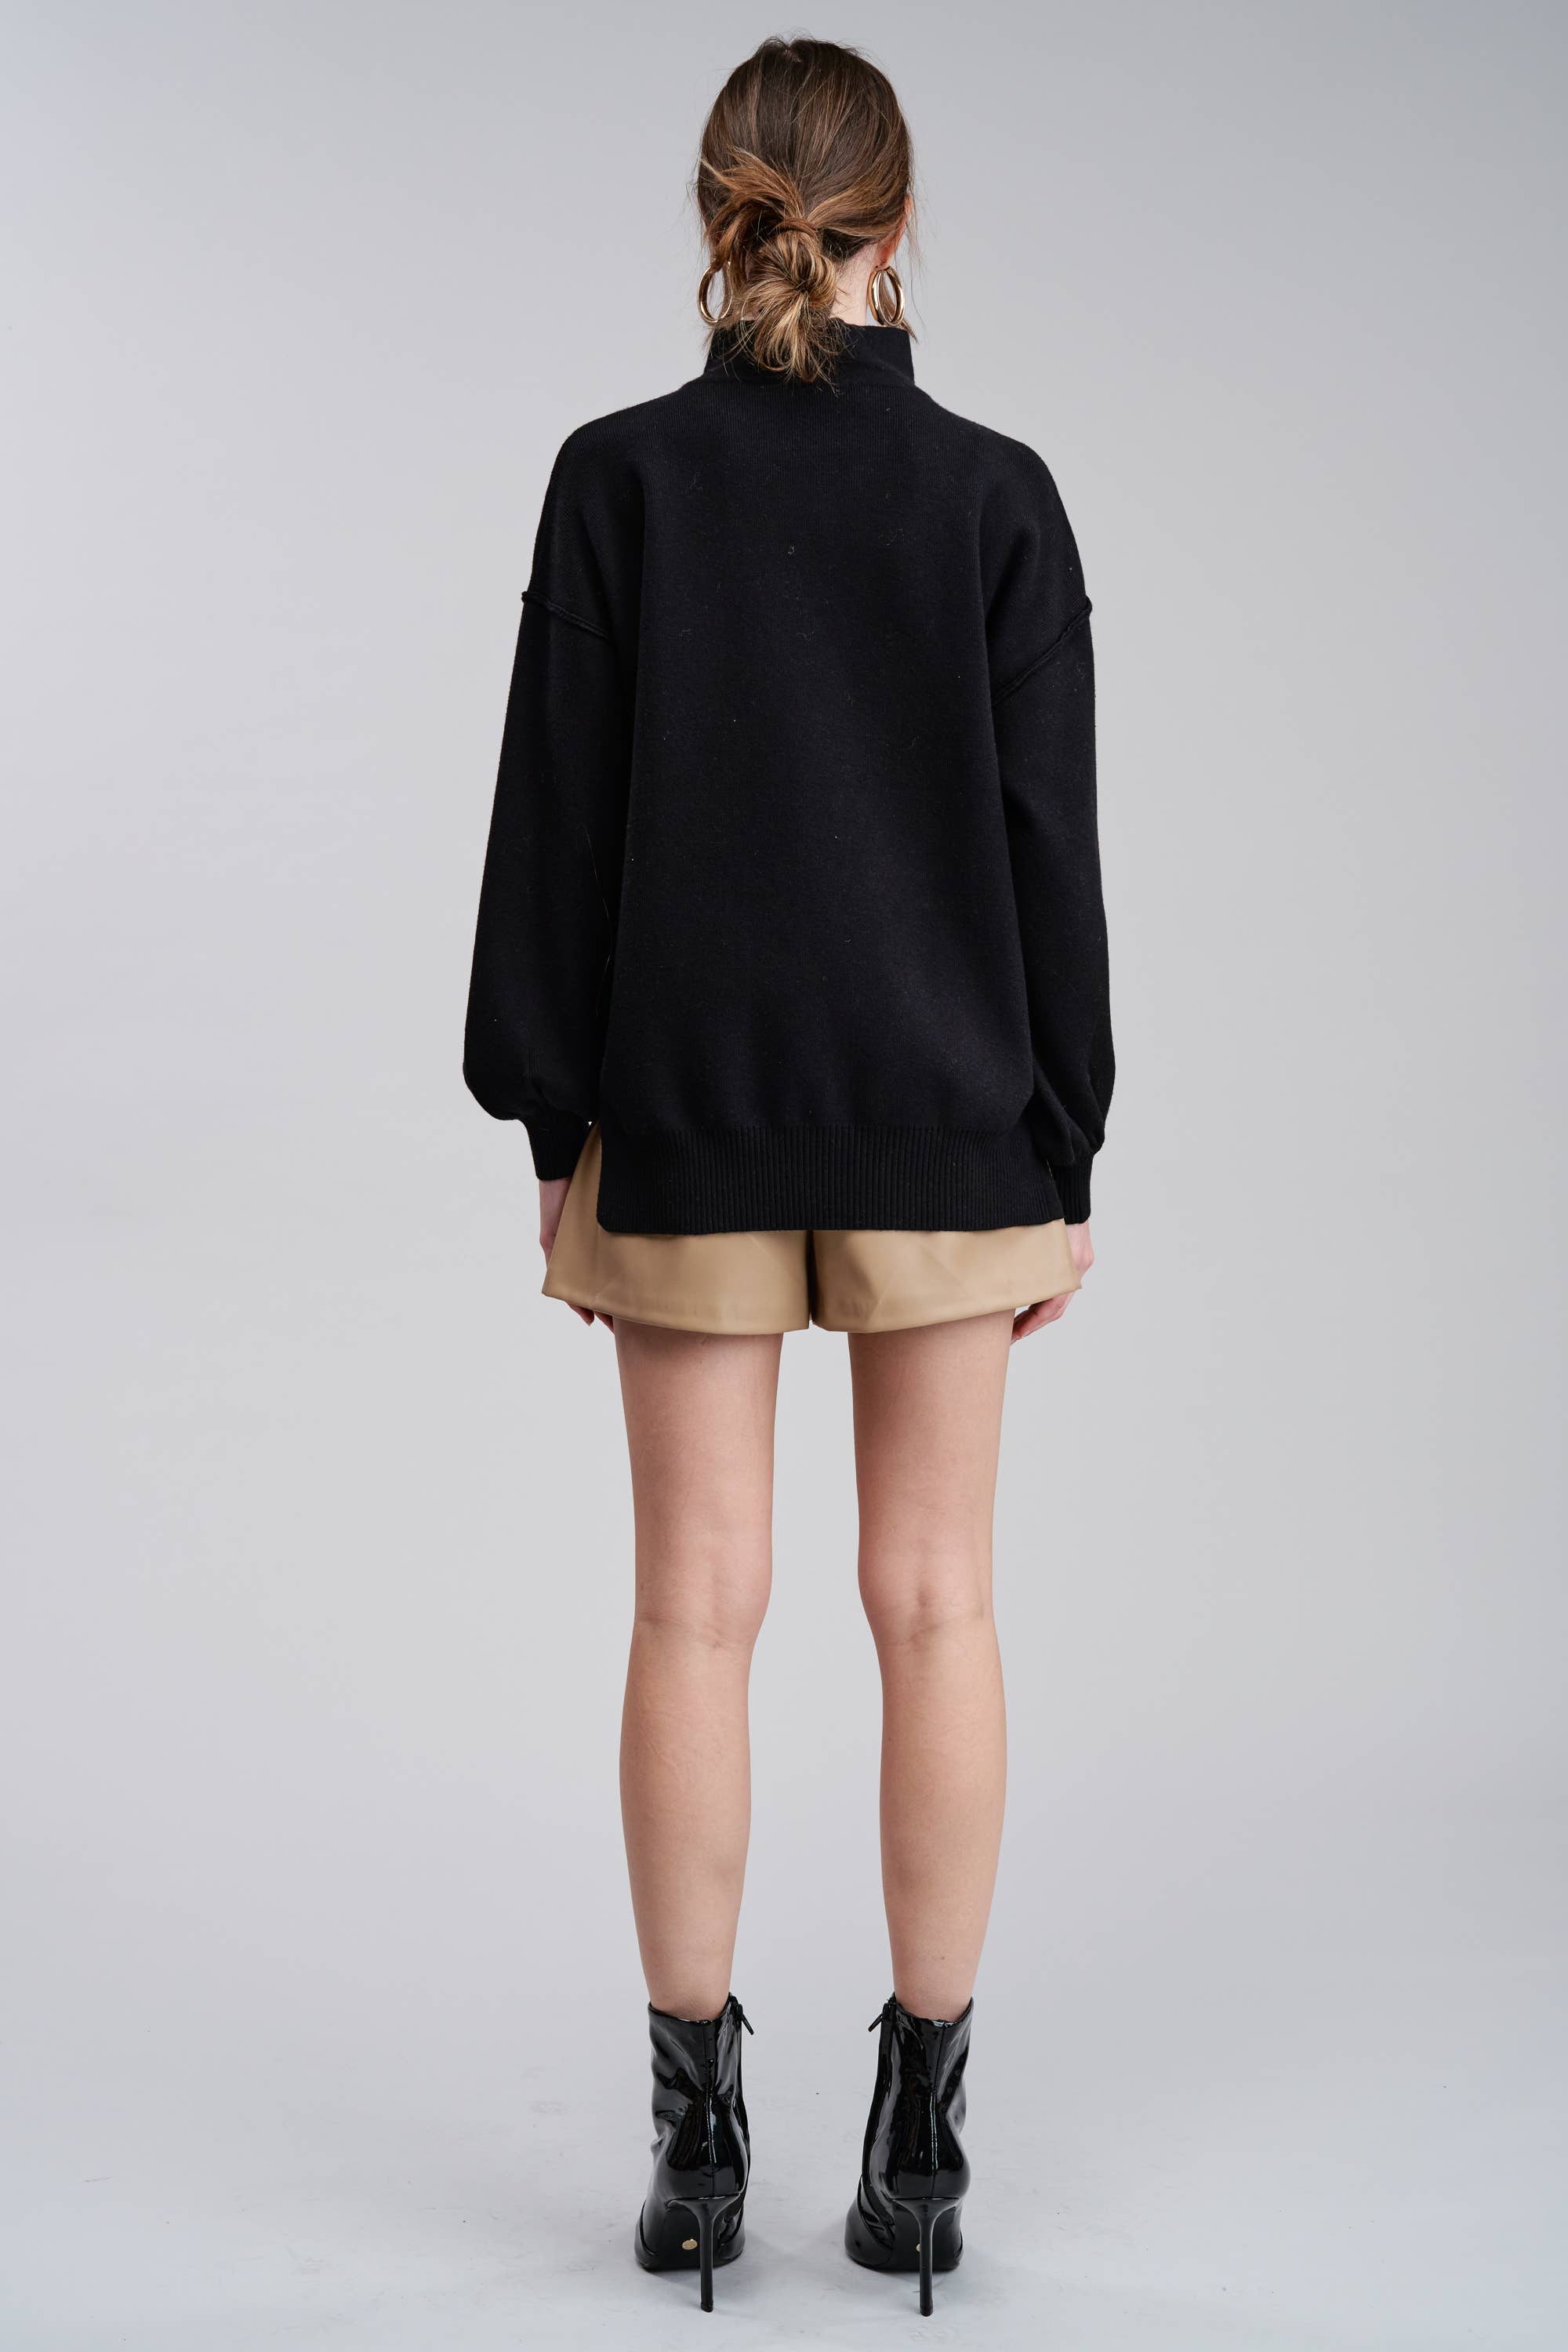 FLAT WHITE Norah Mockneck Pullover Sweater in Black